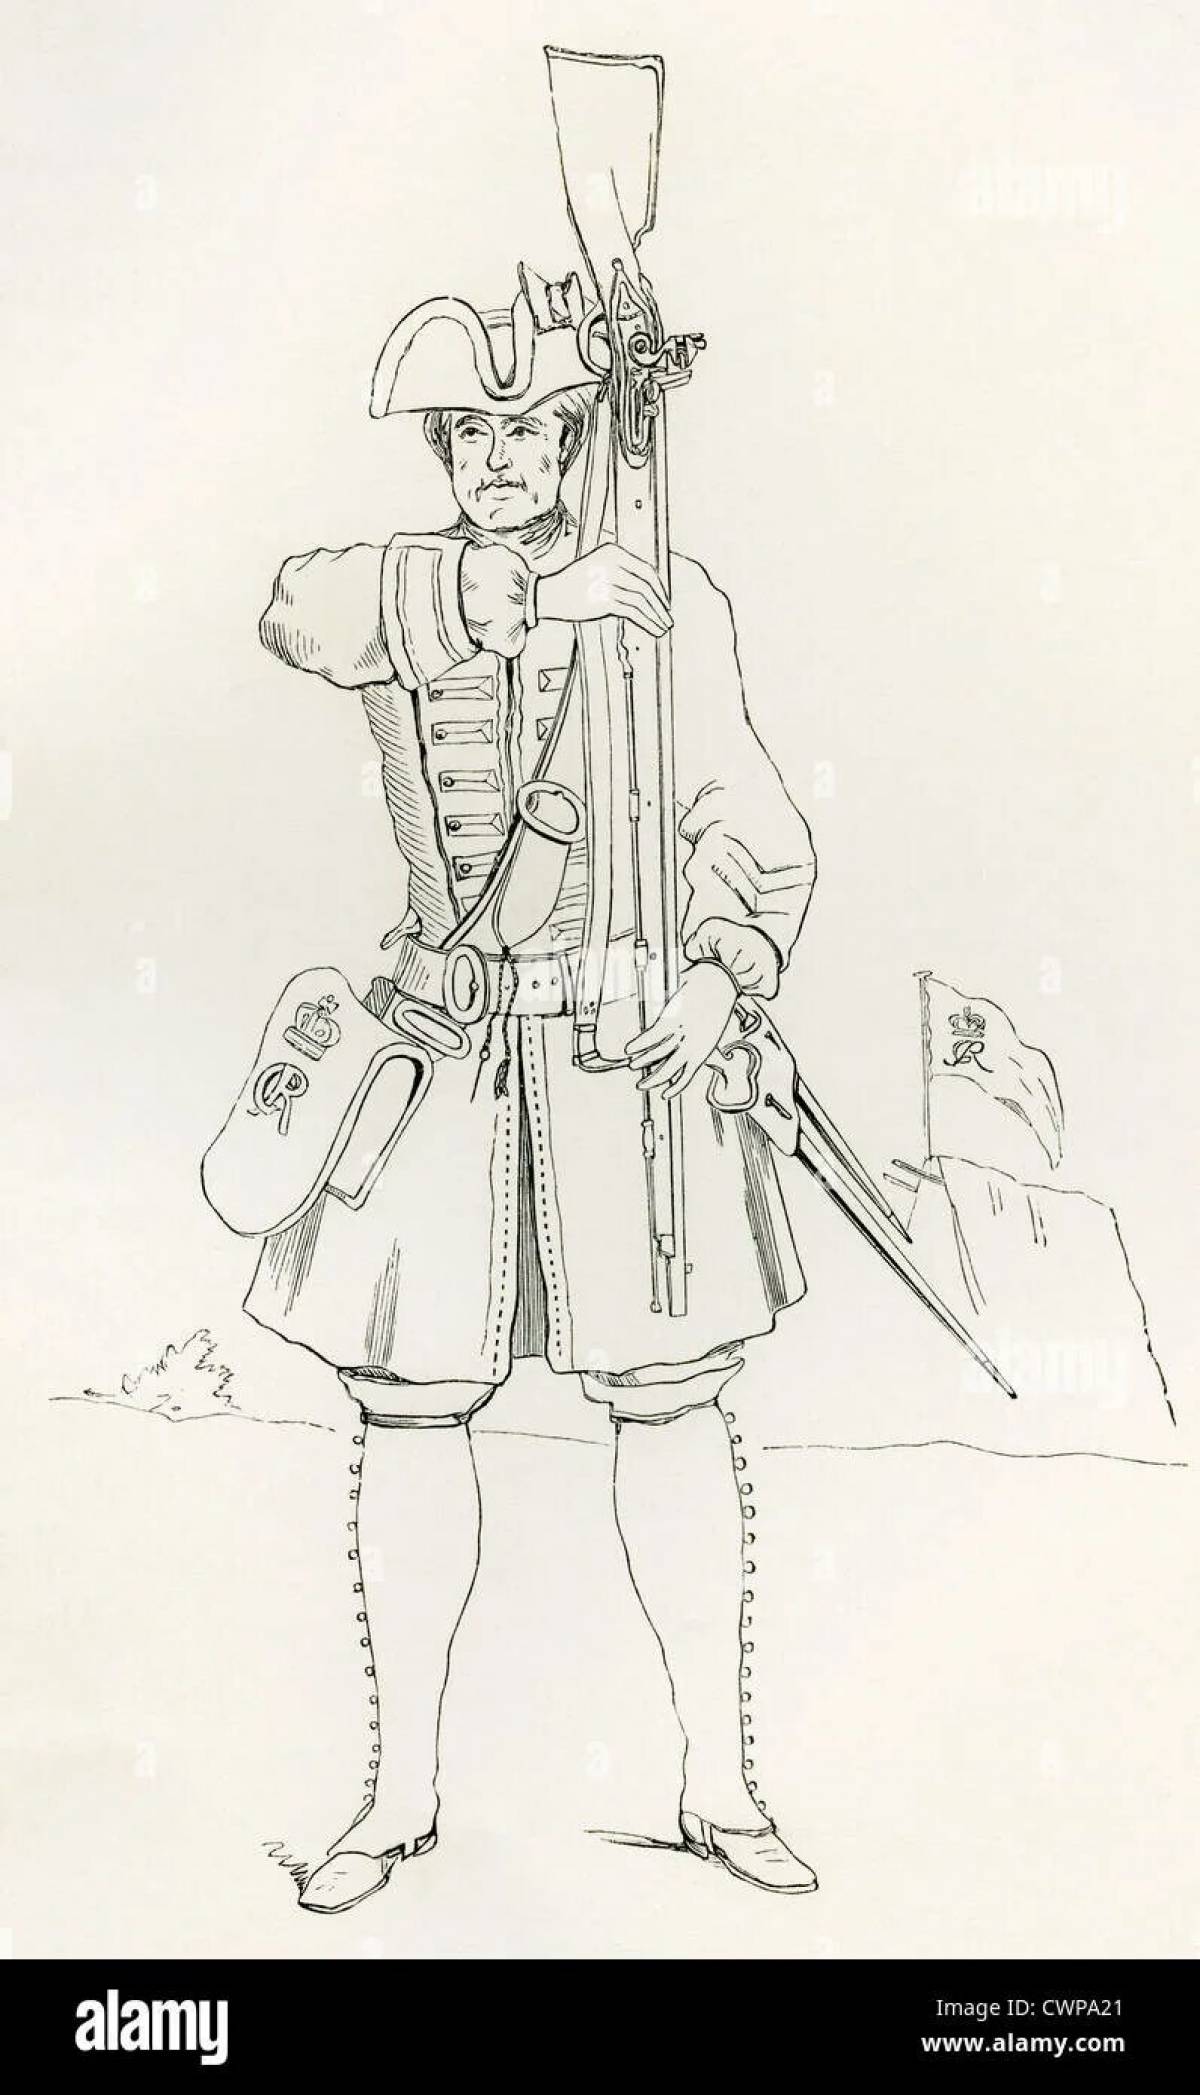 Rampant Hussar coloring page